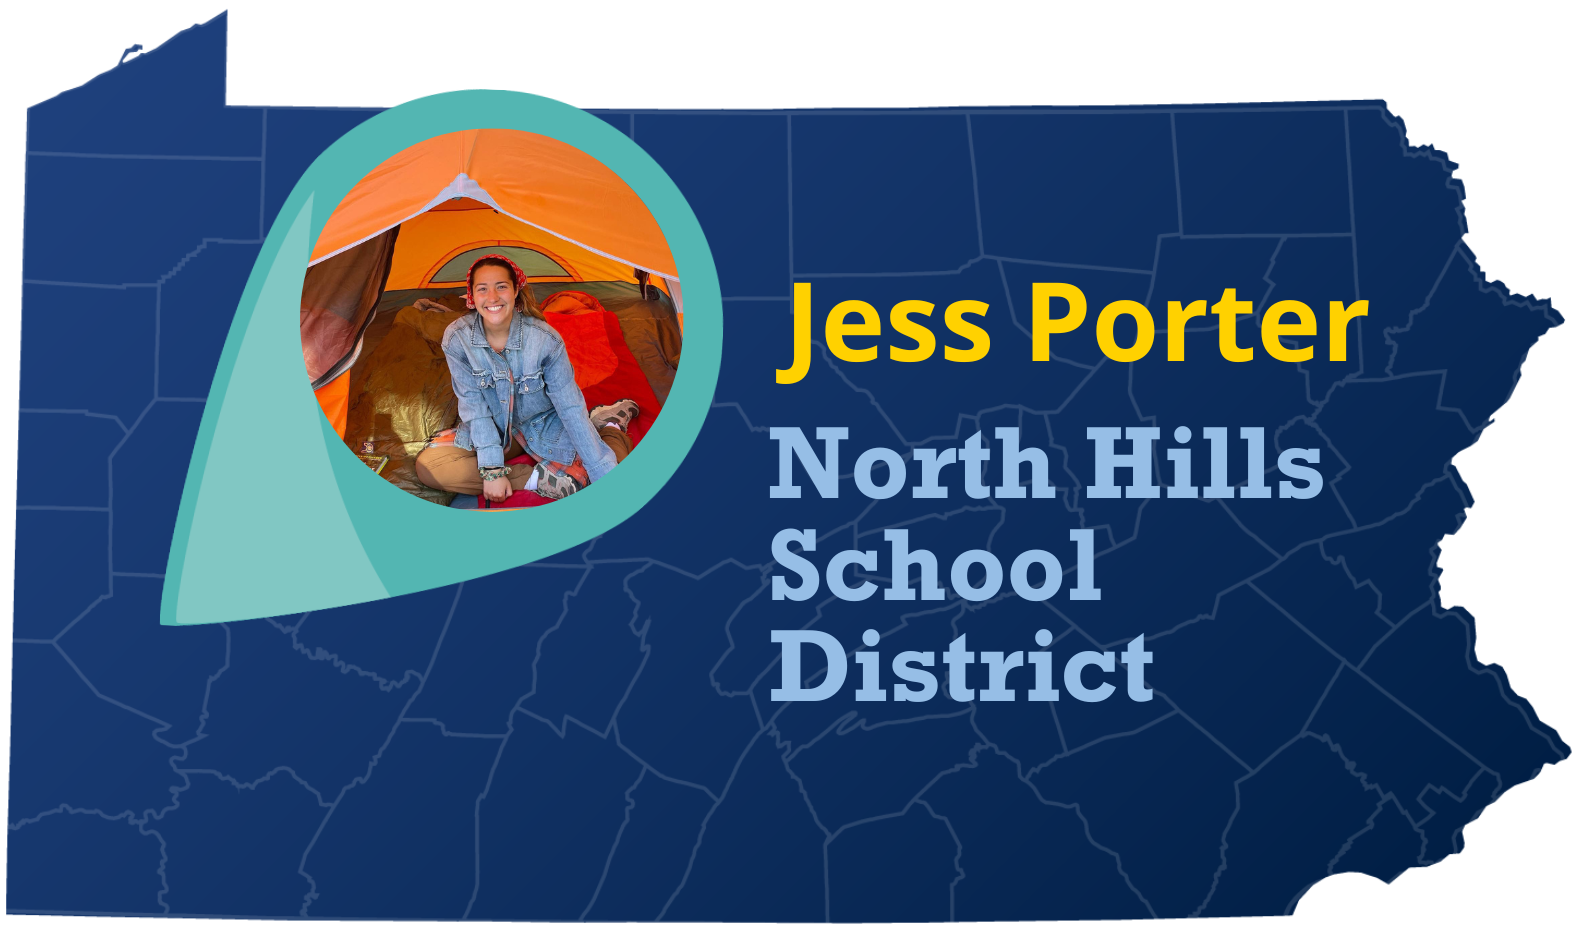 Jess Porter overlayed onto a map of Pennsylvania